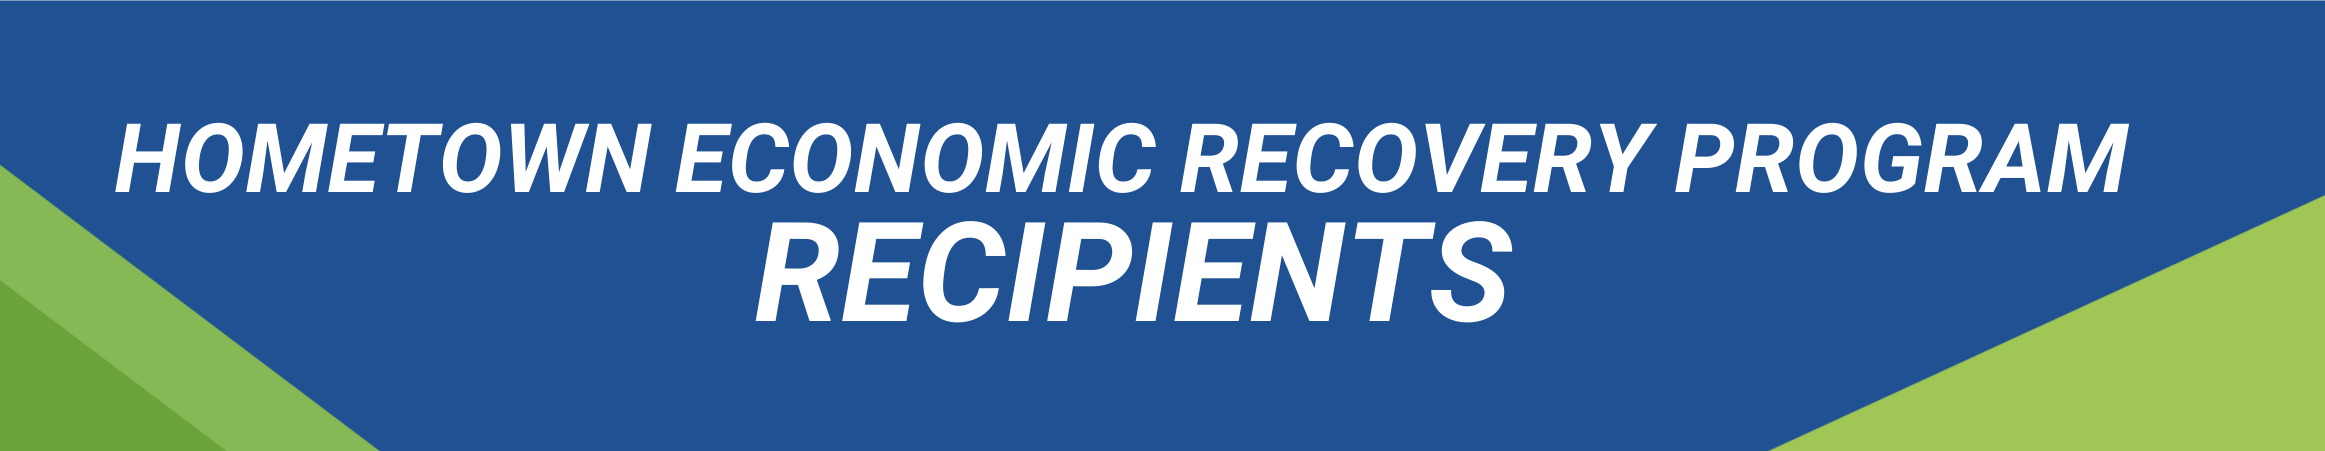 Hometown Economic Recovery Program Recipients